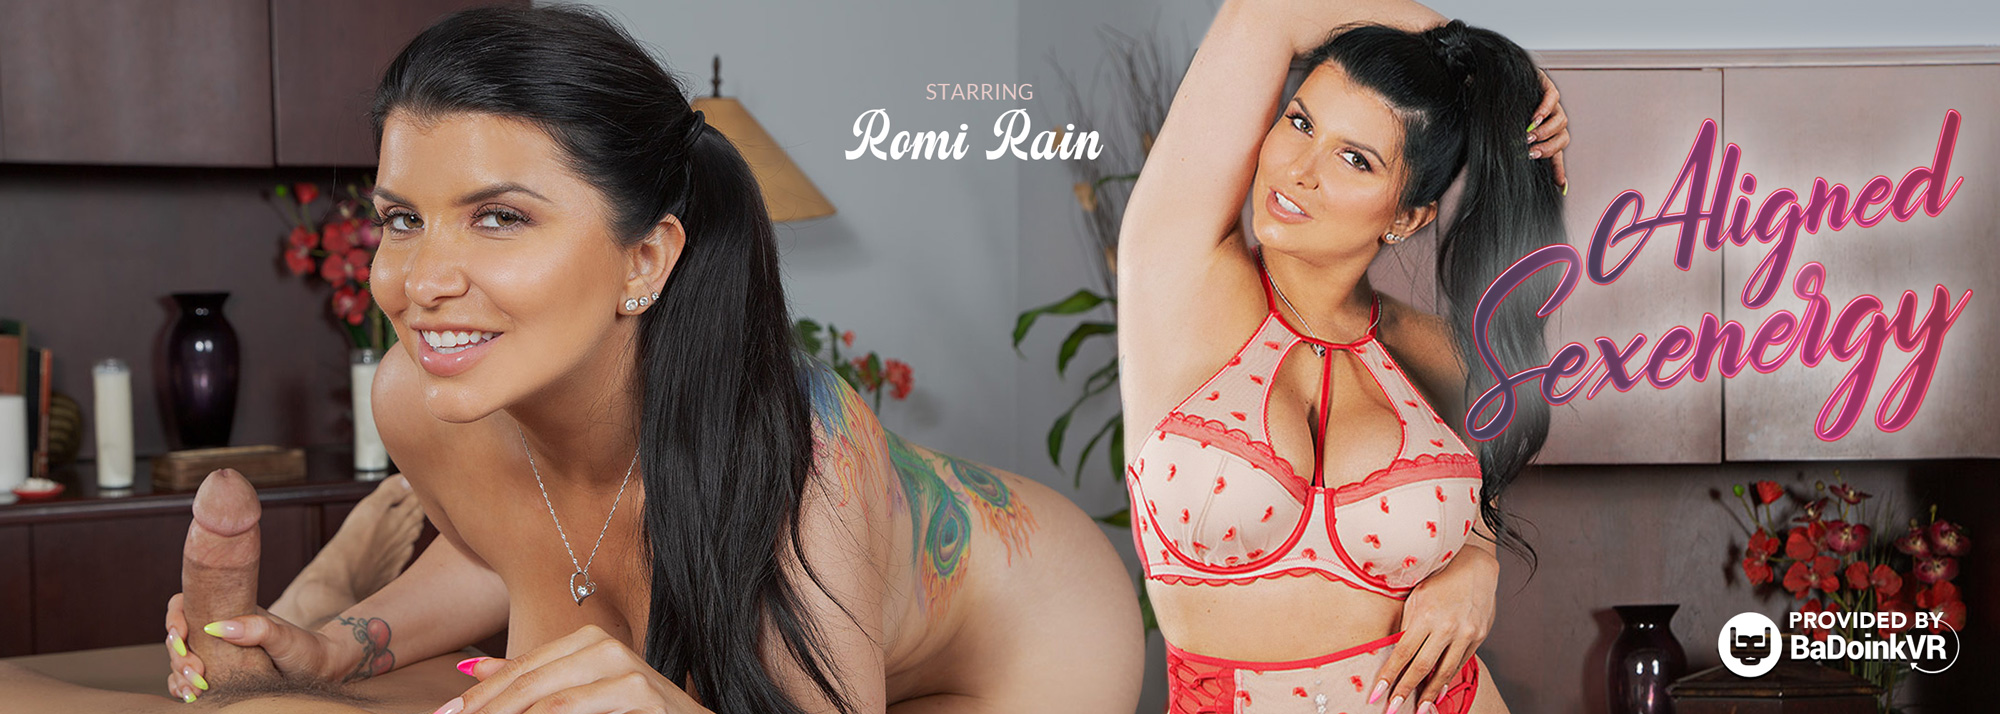 Aligned Sexenergy with Romi Rain  Slideshow